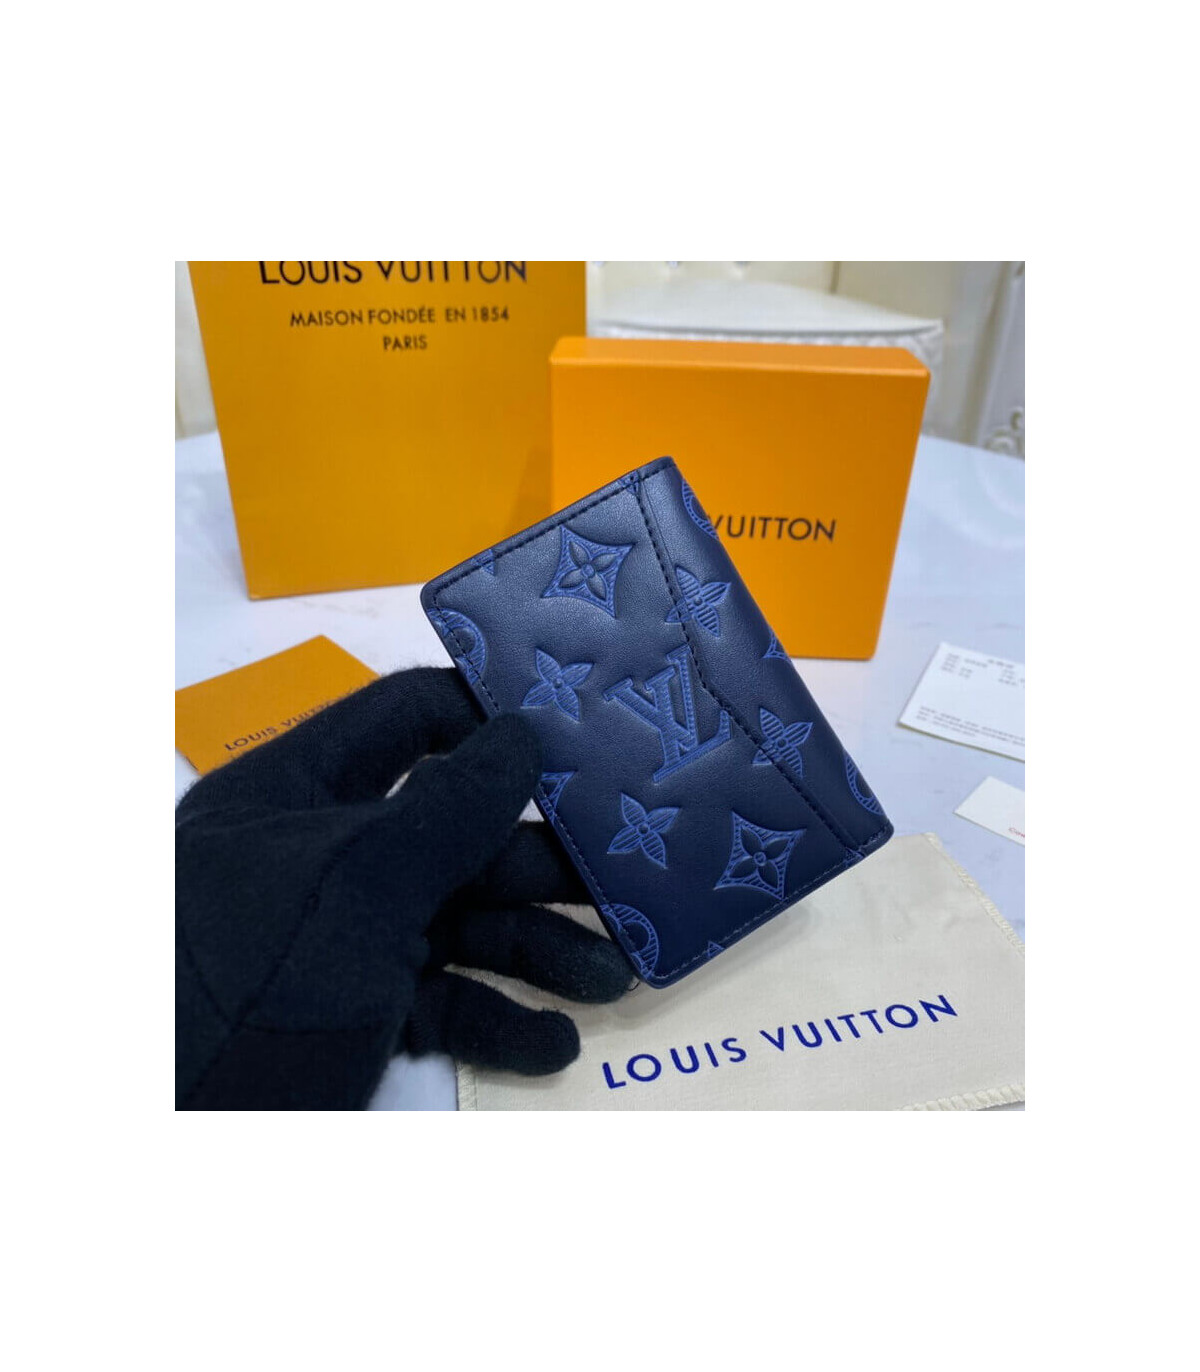 LOUIS VUITTON LOUIS VUITTON Pocket Organizer Case M80421 Monogram Shadow  leather Blue Used LV M80421｜Product Code：2100301064065｜BRAND OFF Online  Store